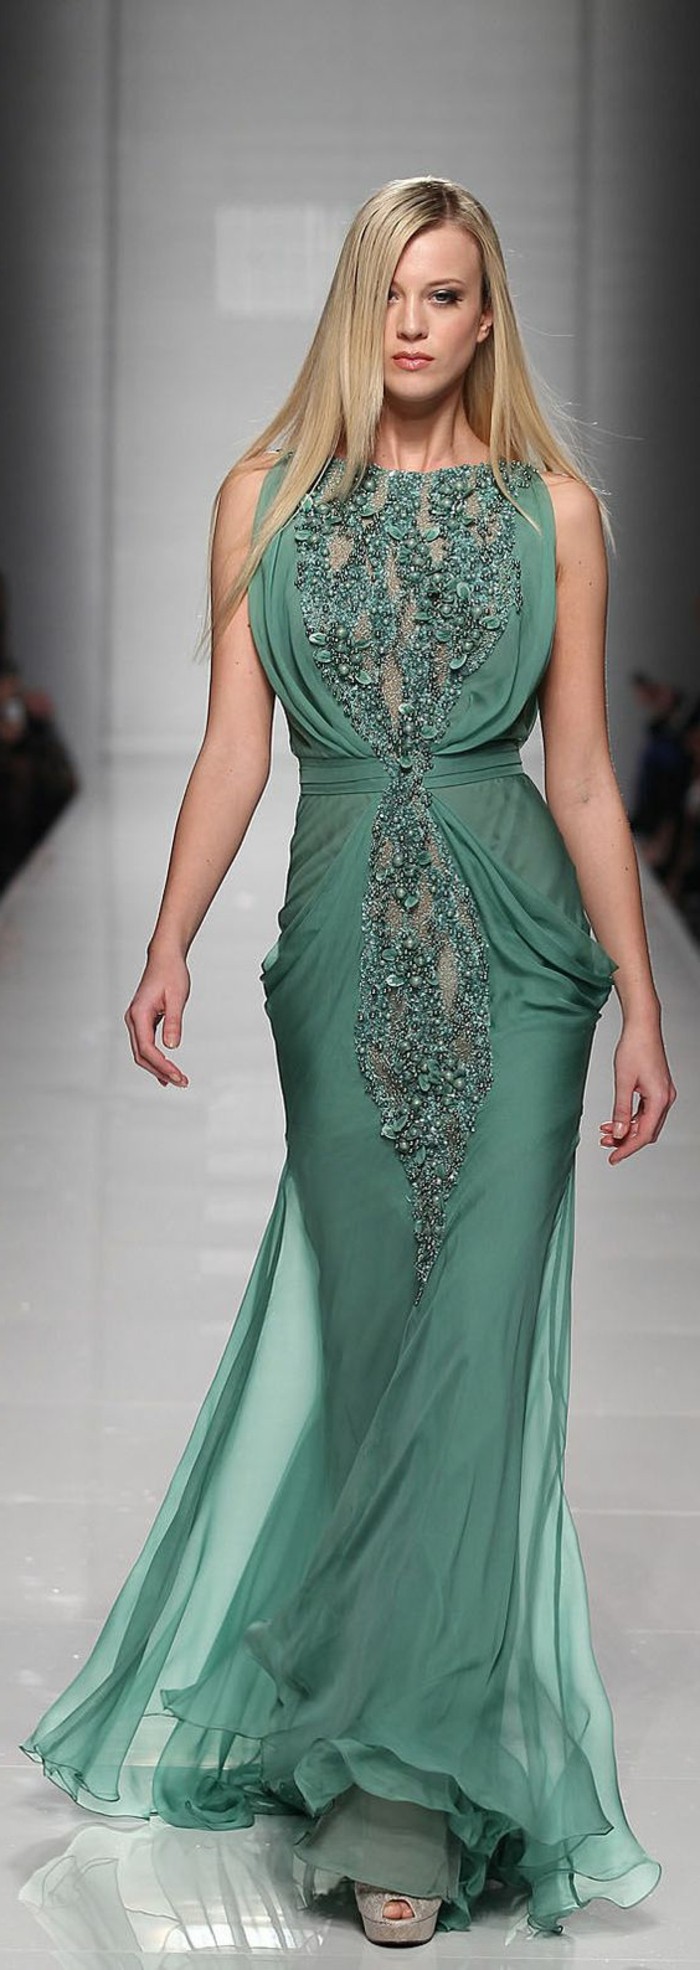 Elegante-Kleider-grün-haute-couture